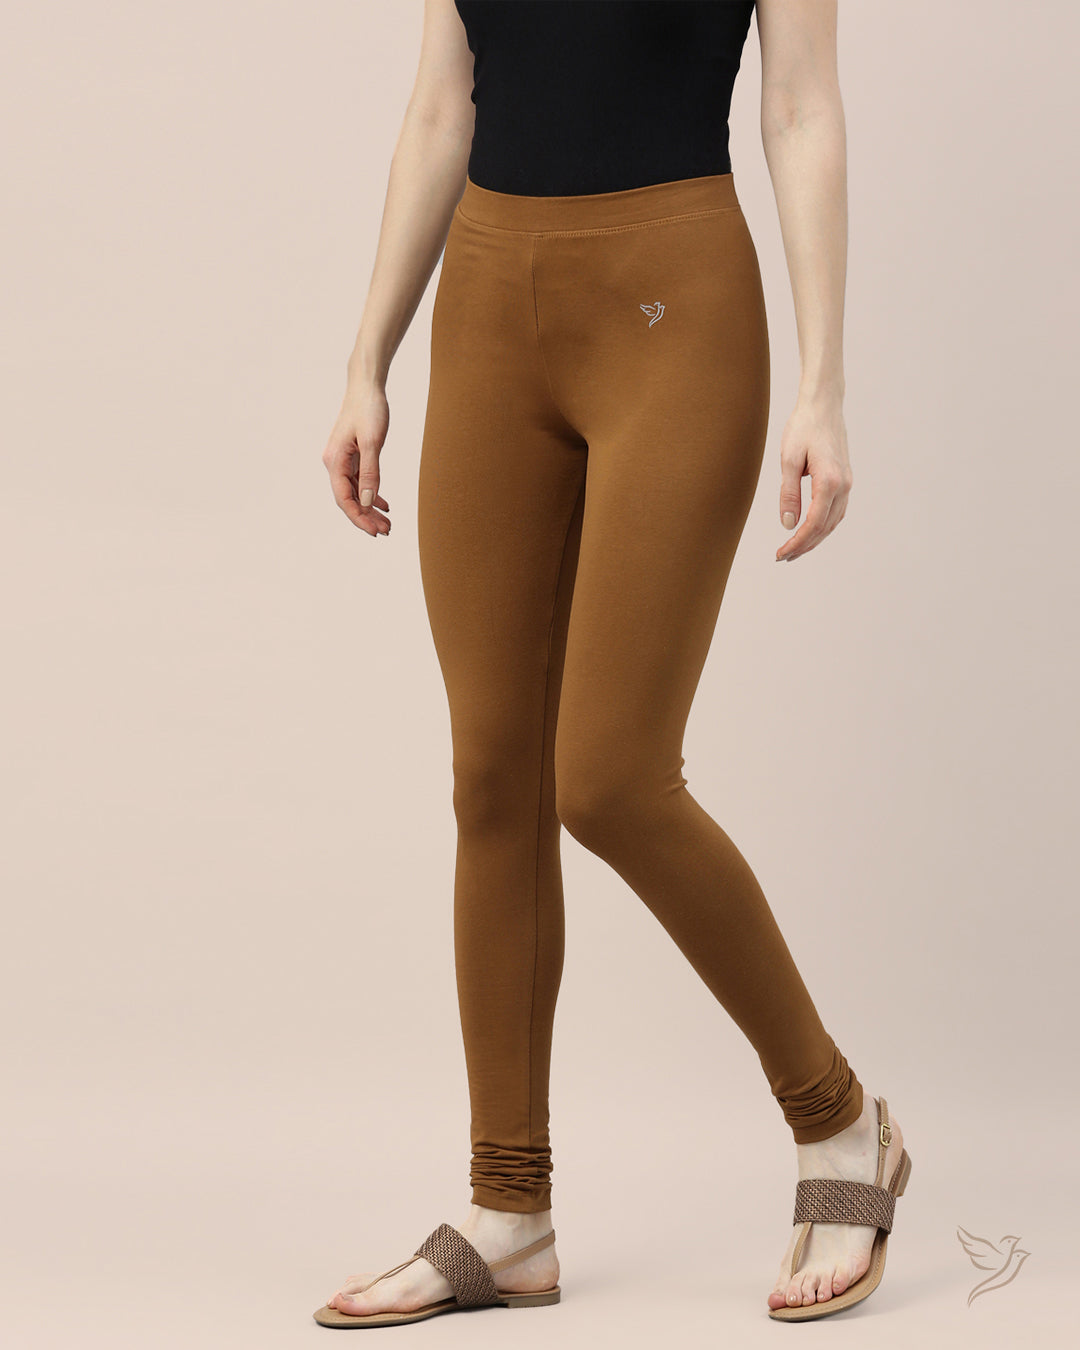 Golden Brown Cotton Churidar Legging for Women